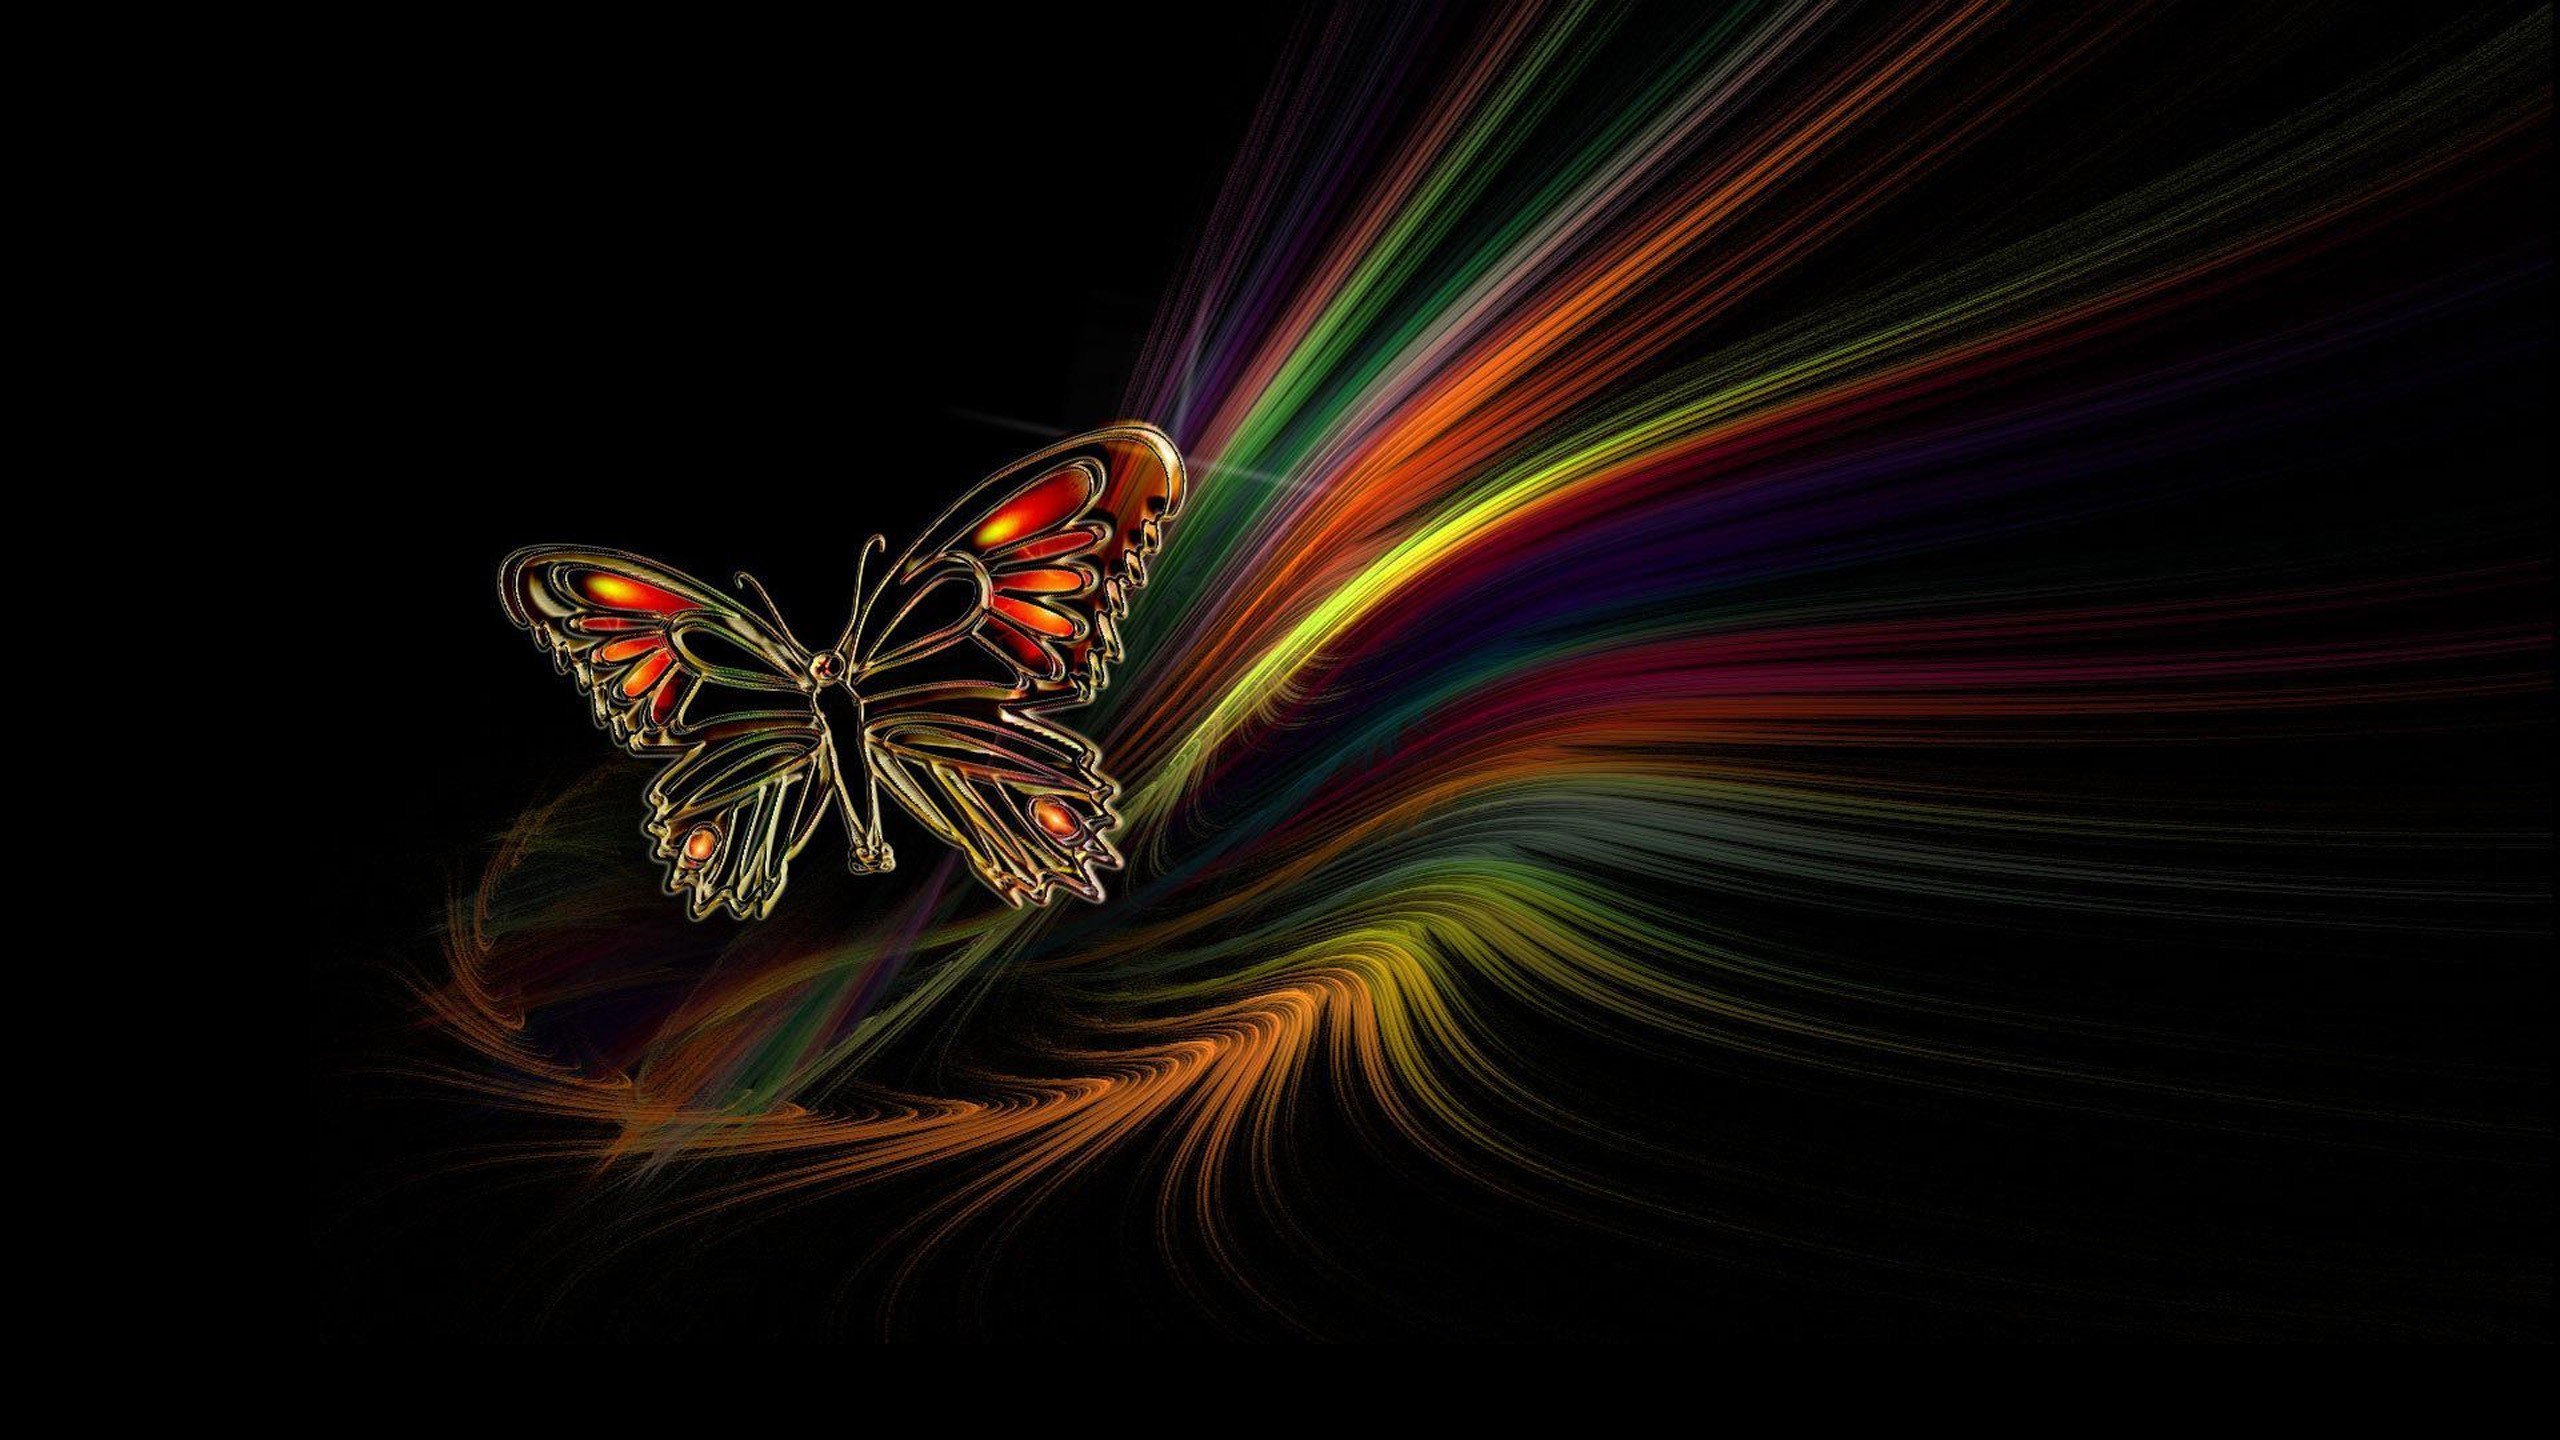 Обои на стол бабочки. Бабочка на темном фоне. Бабочка яркая на черном фоне. Яркие бабочки. Радужная бабочка.